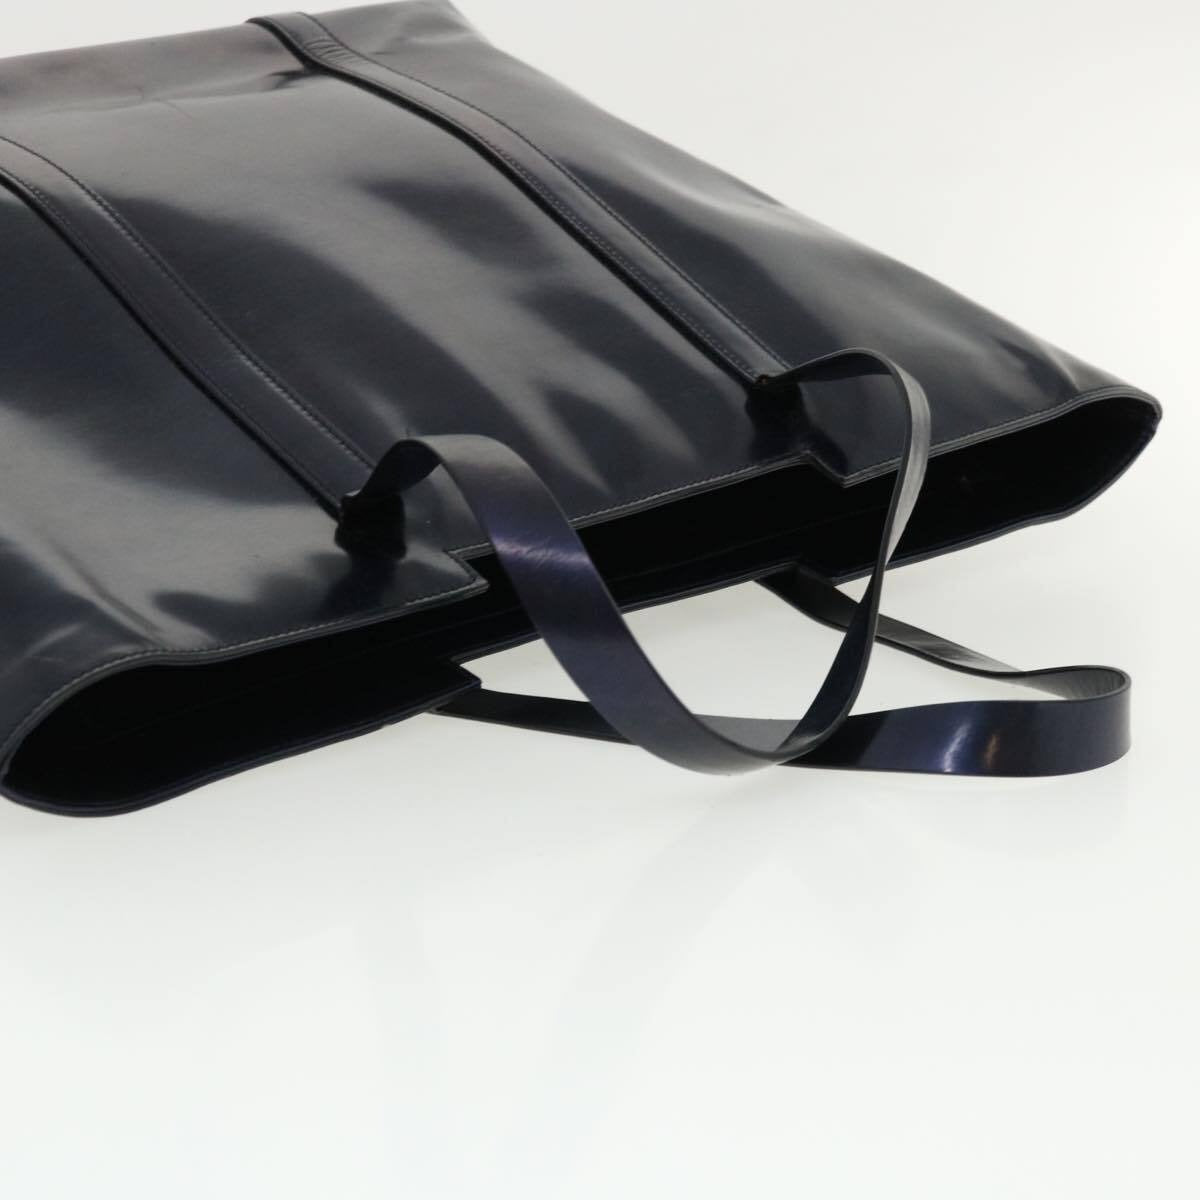 Gucci, metallic blue leather, XL tote bag/shoulder purse with  a top zip closure, graduated shape, & chrome accents